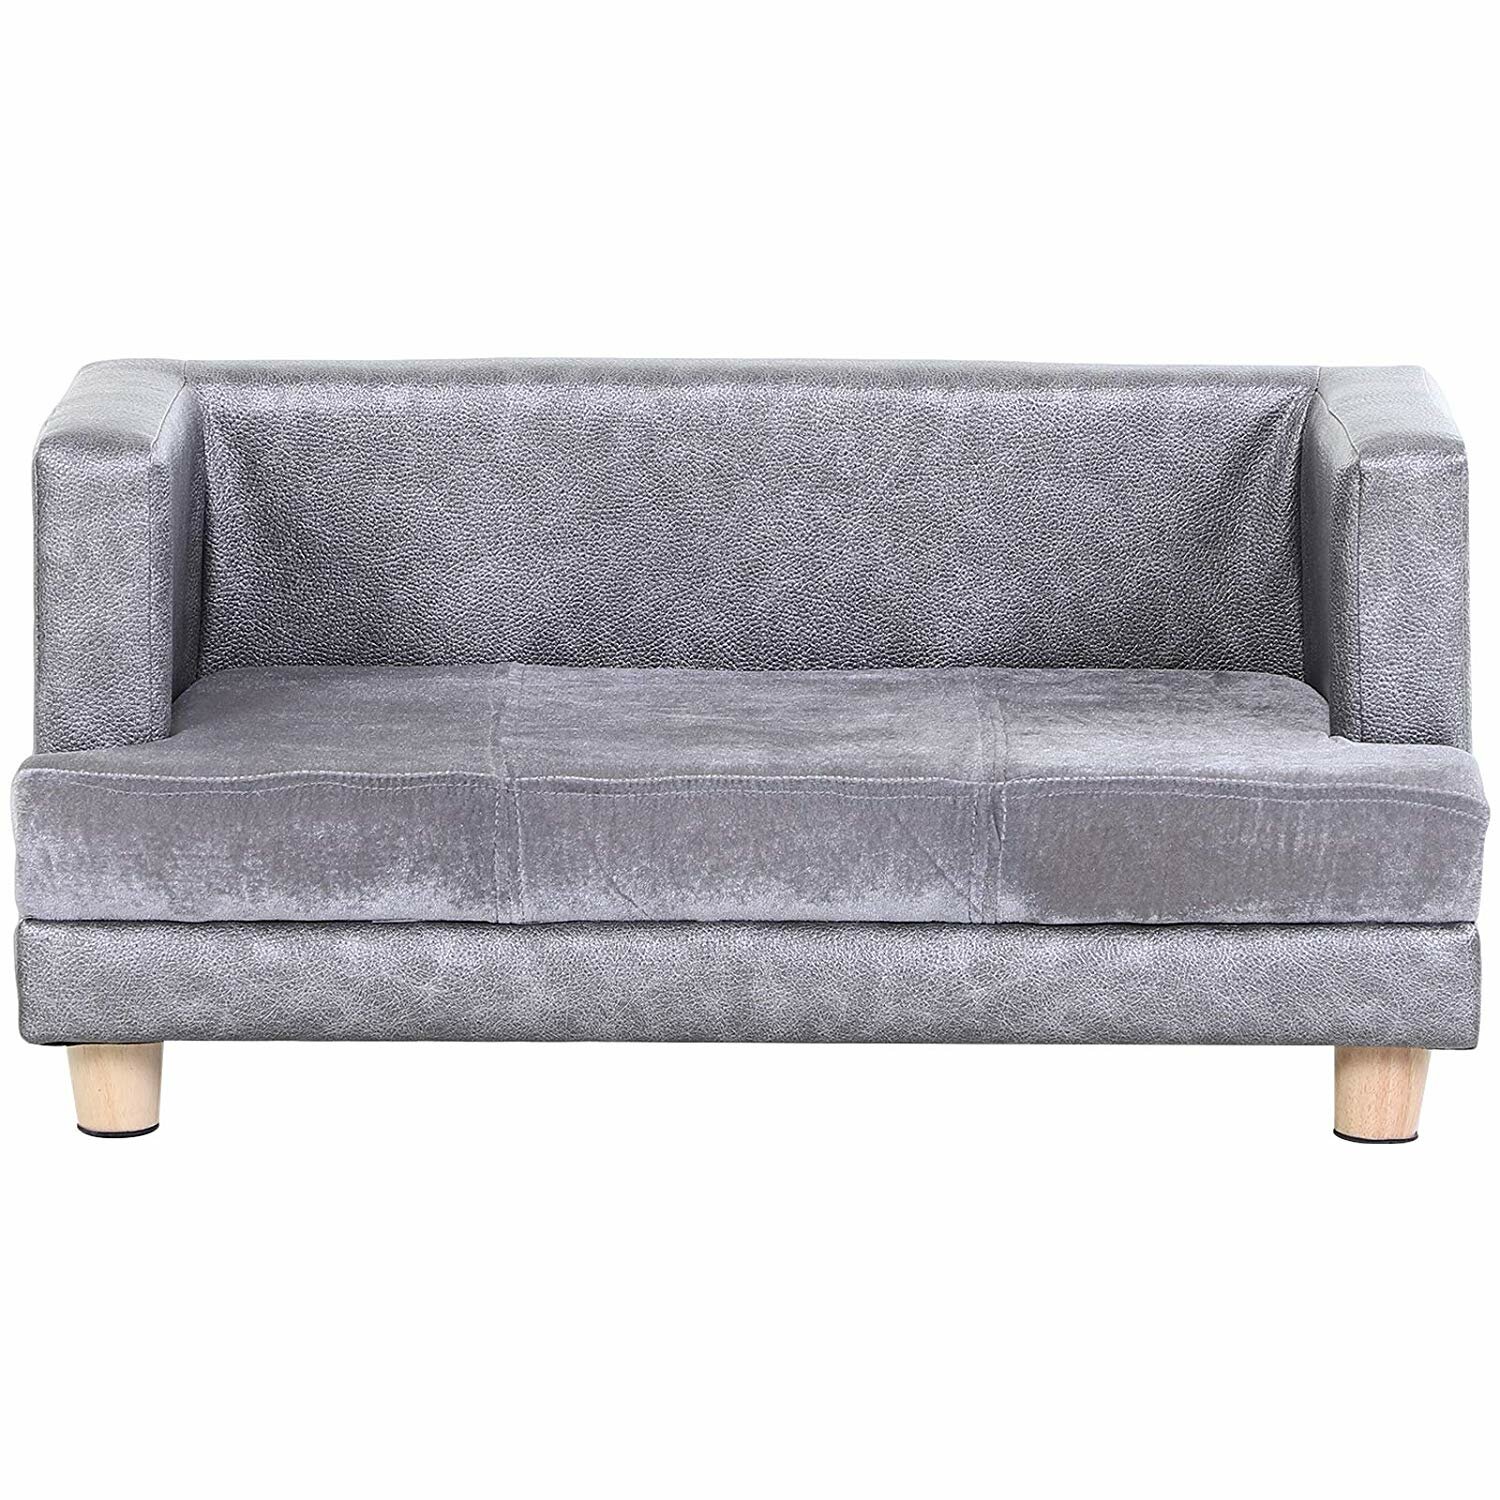 grey dog sofa bed